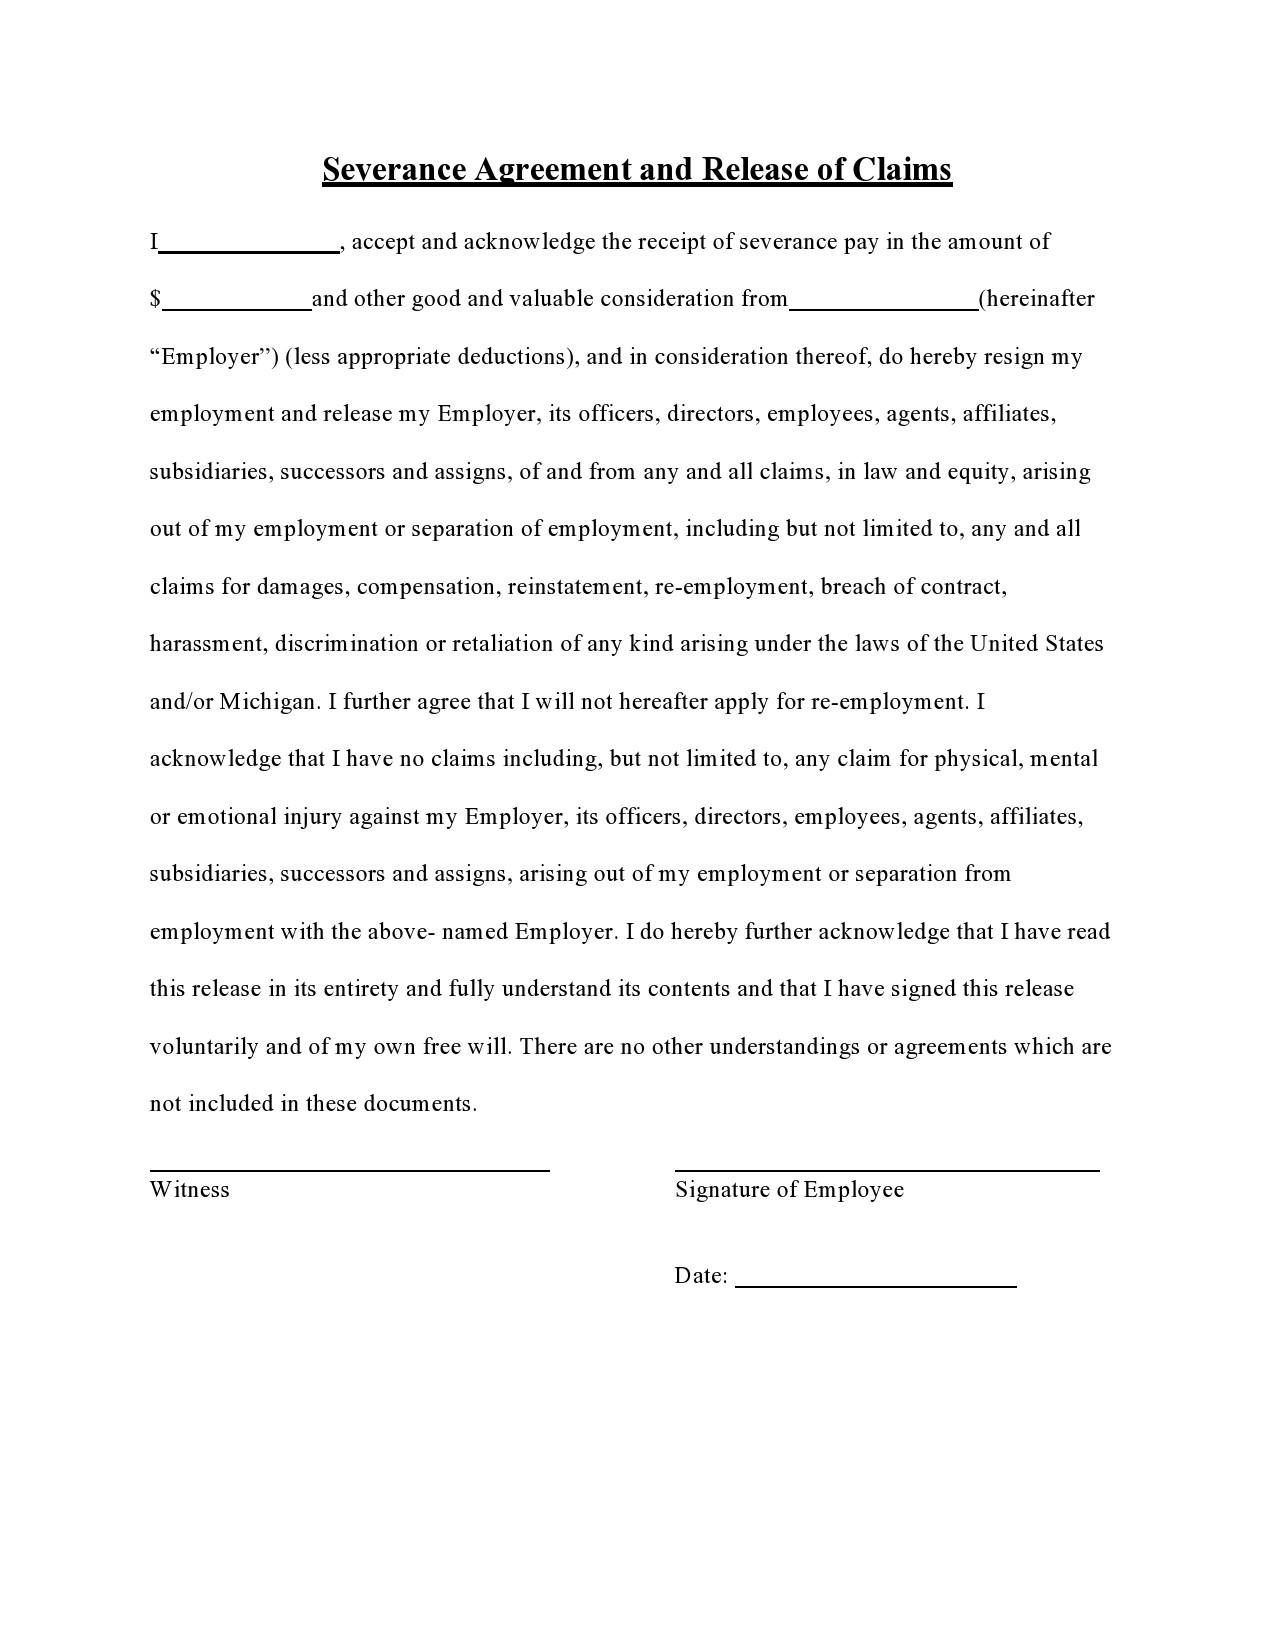 Free severance agreement template 32